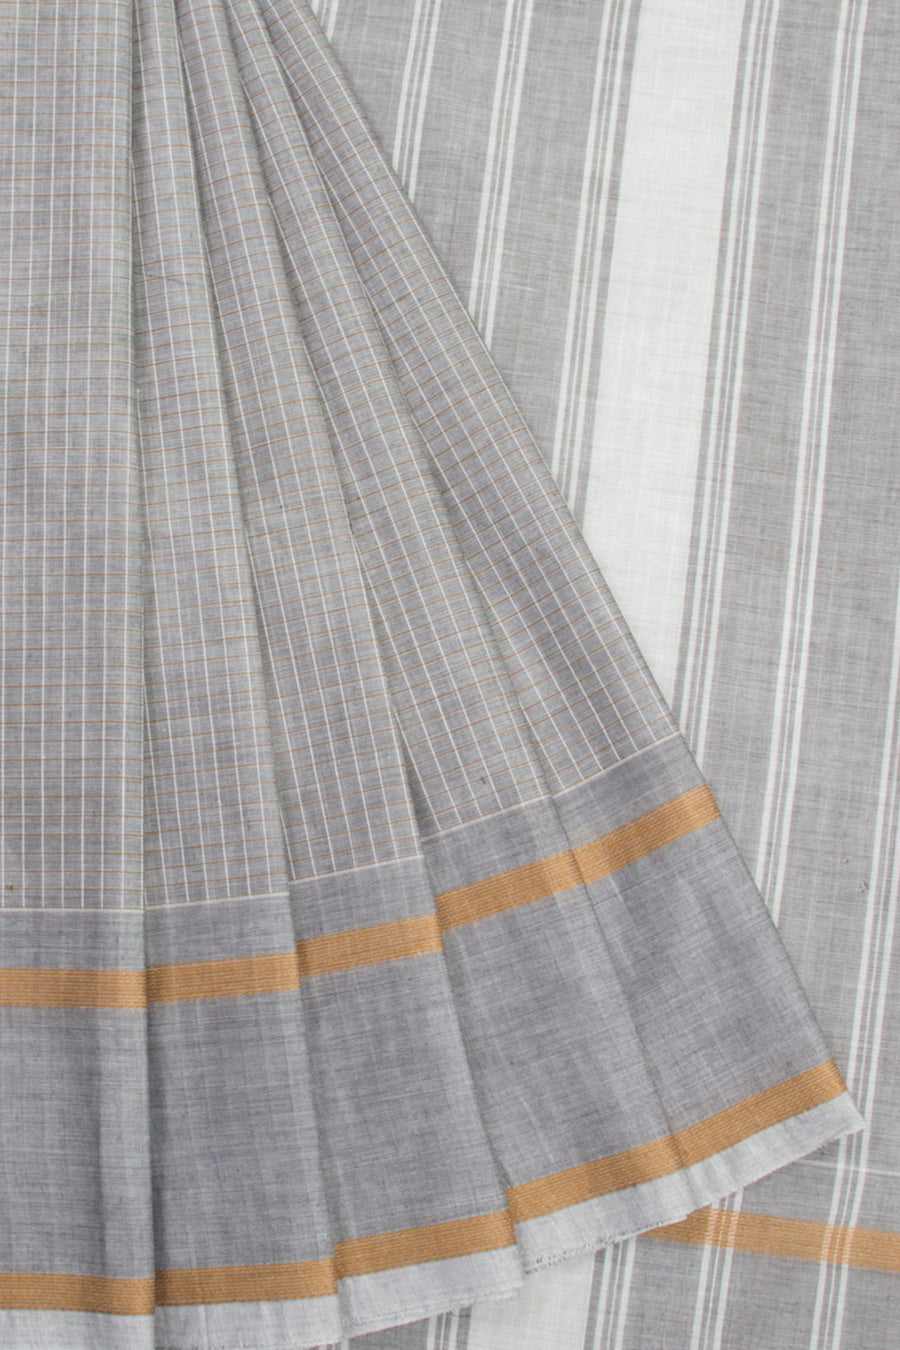 Grey Handwoven Kanchi Cotton Saree 10068520 - Avishya